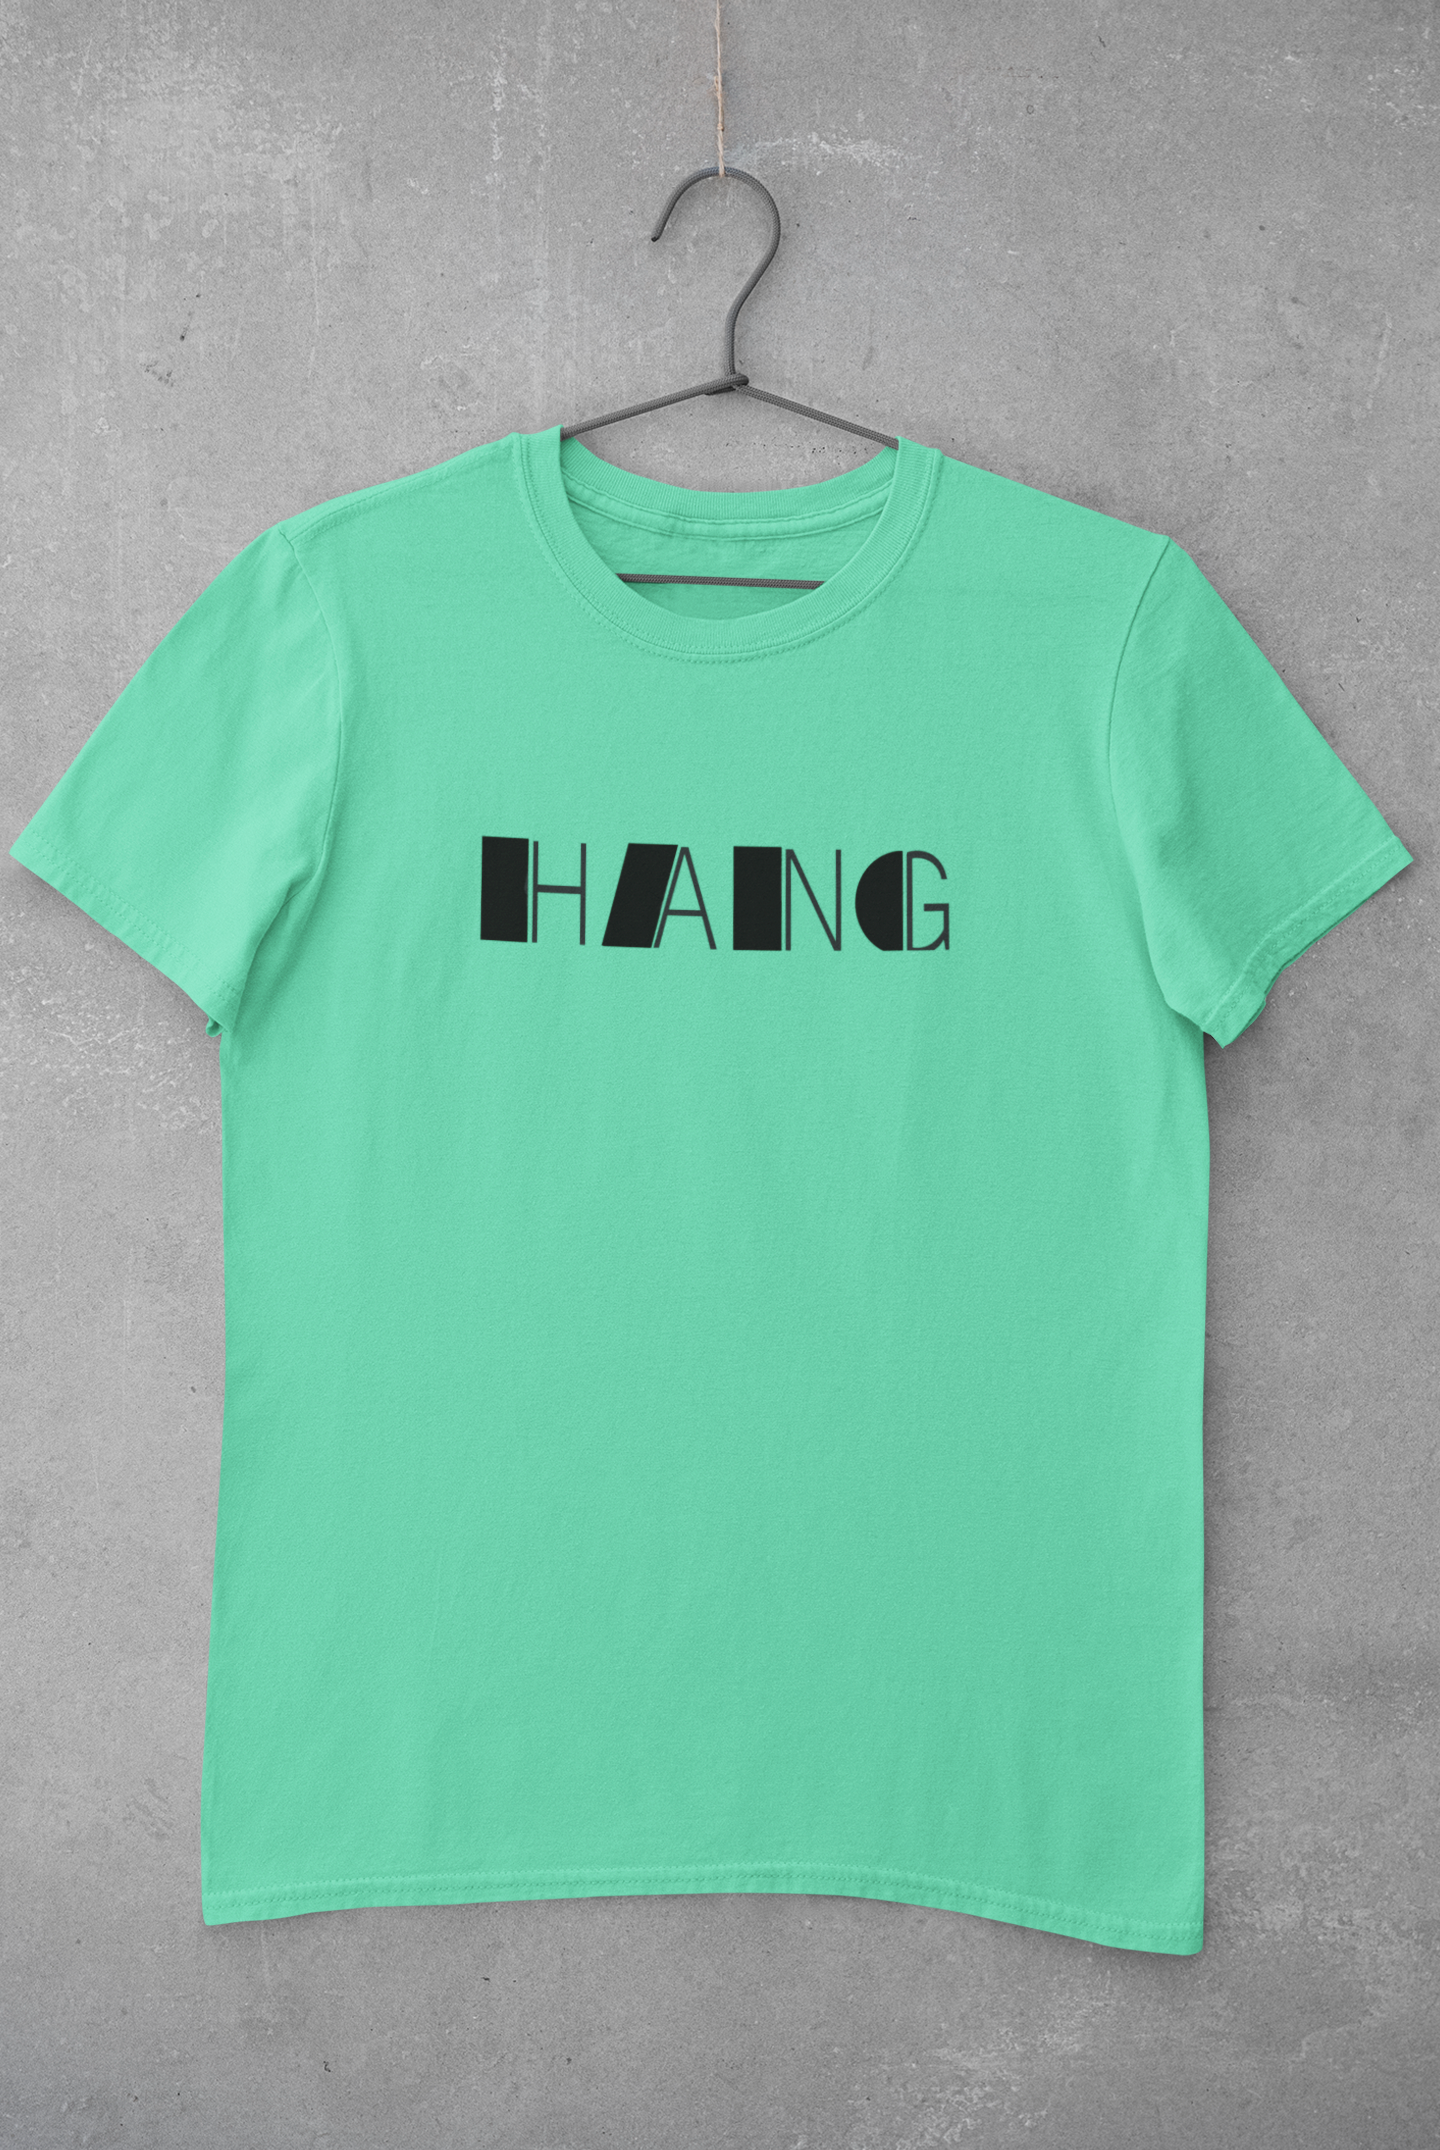 Hang Olivia Wilde Celebrity T-shirt- FunkyTeesClub